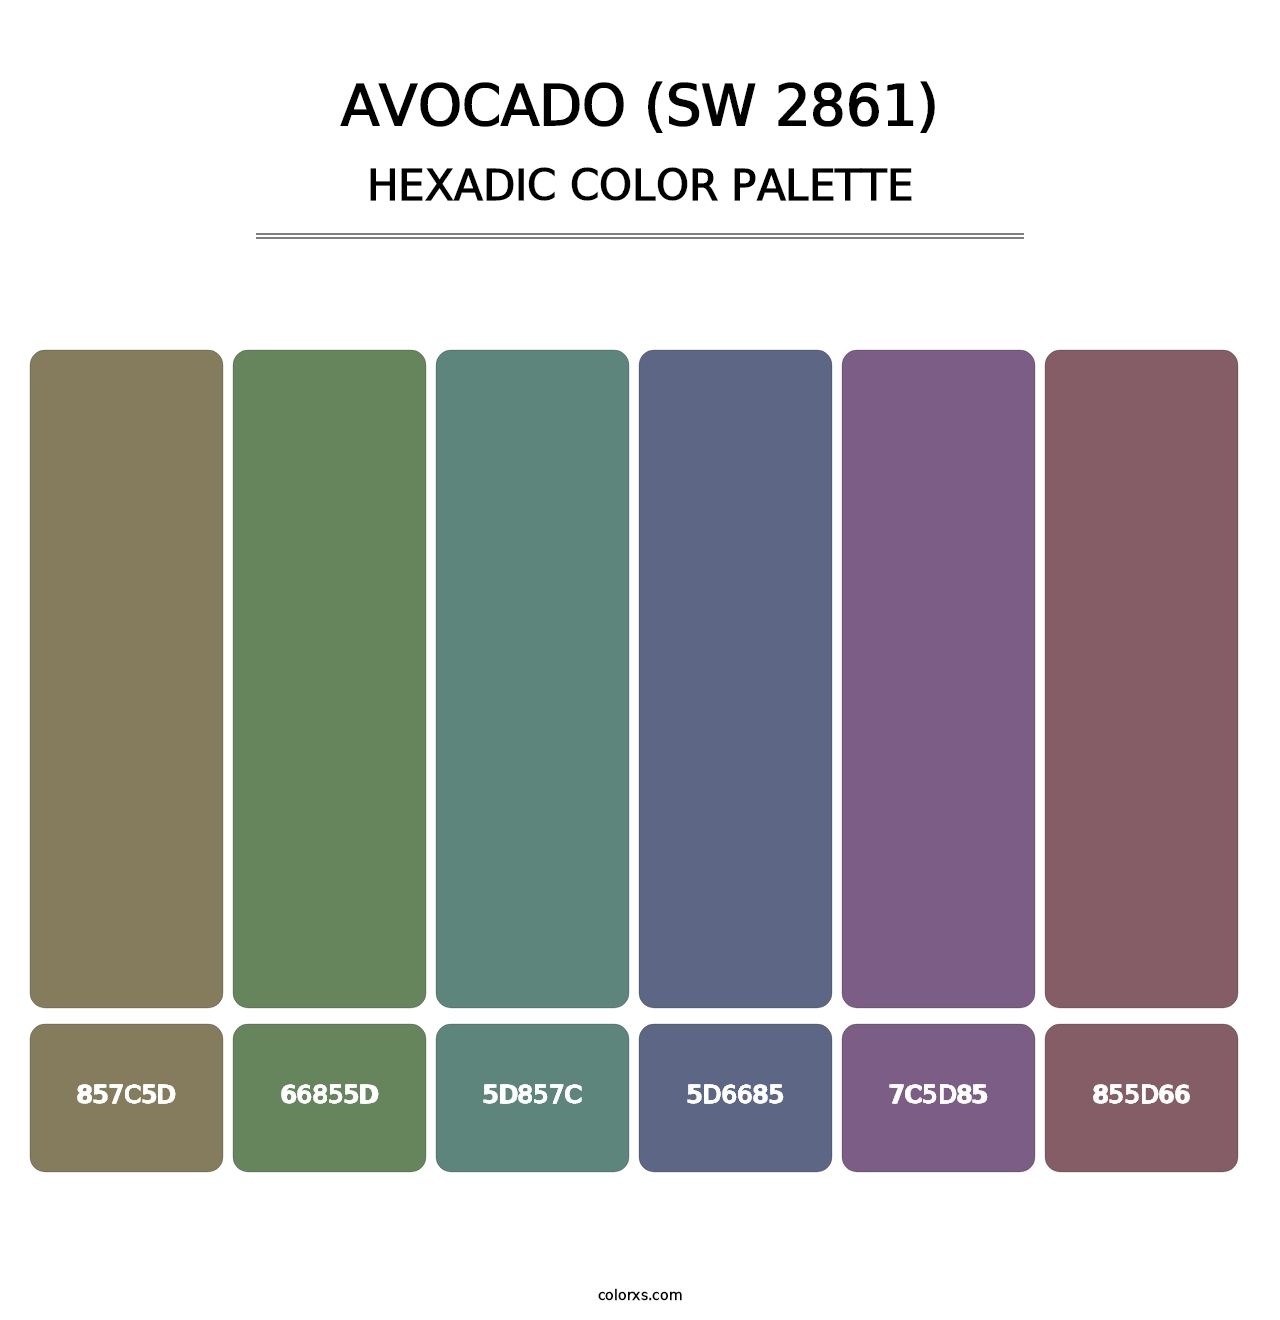 Avocado (SW 2861) - Hexadic Color Palette